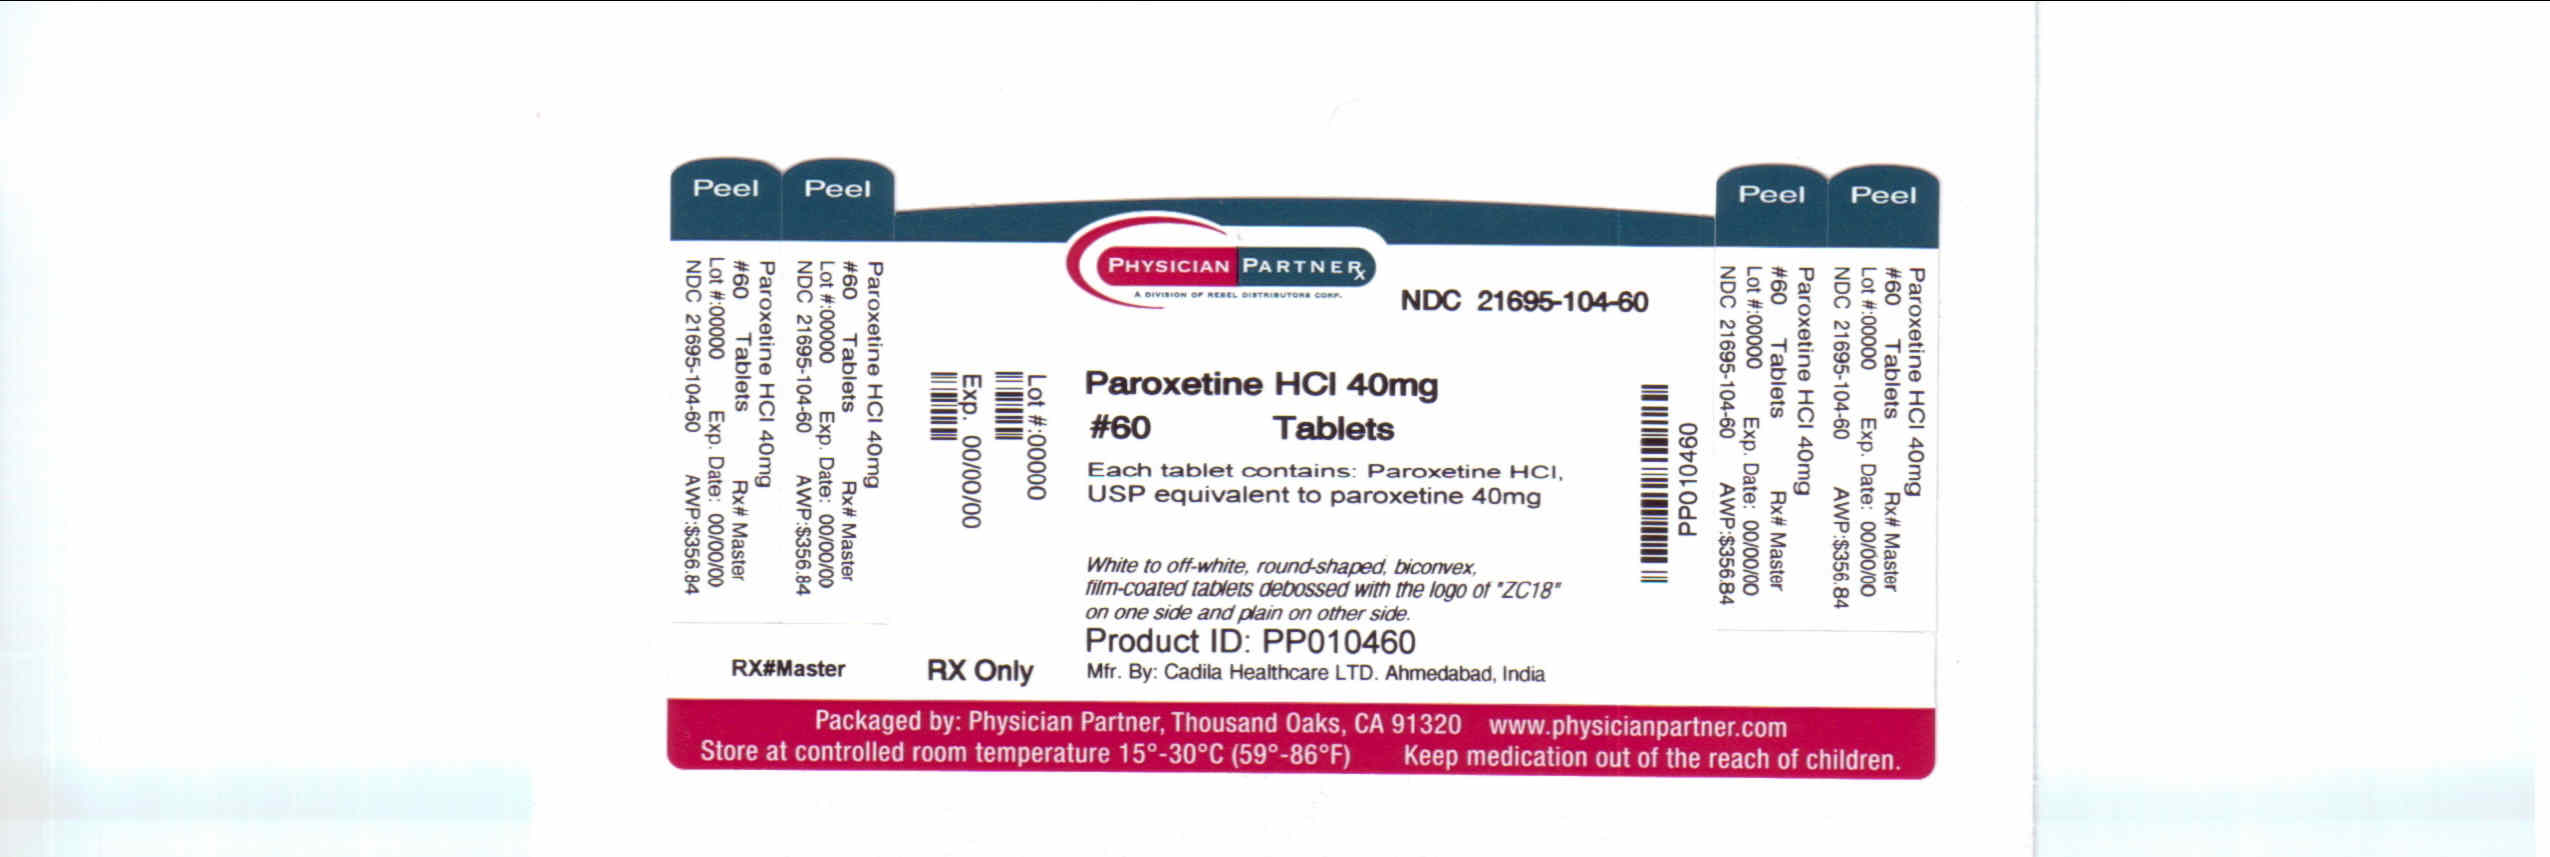 Paroxetine HCL 40mg